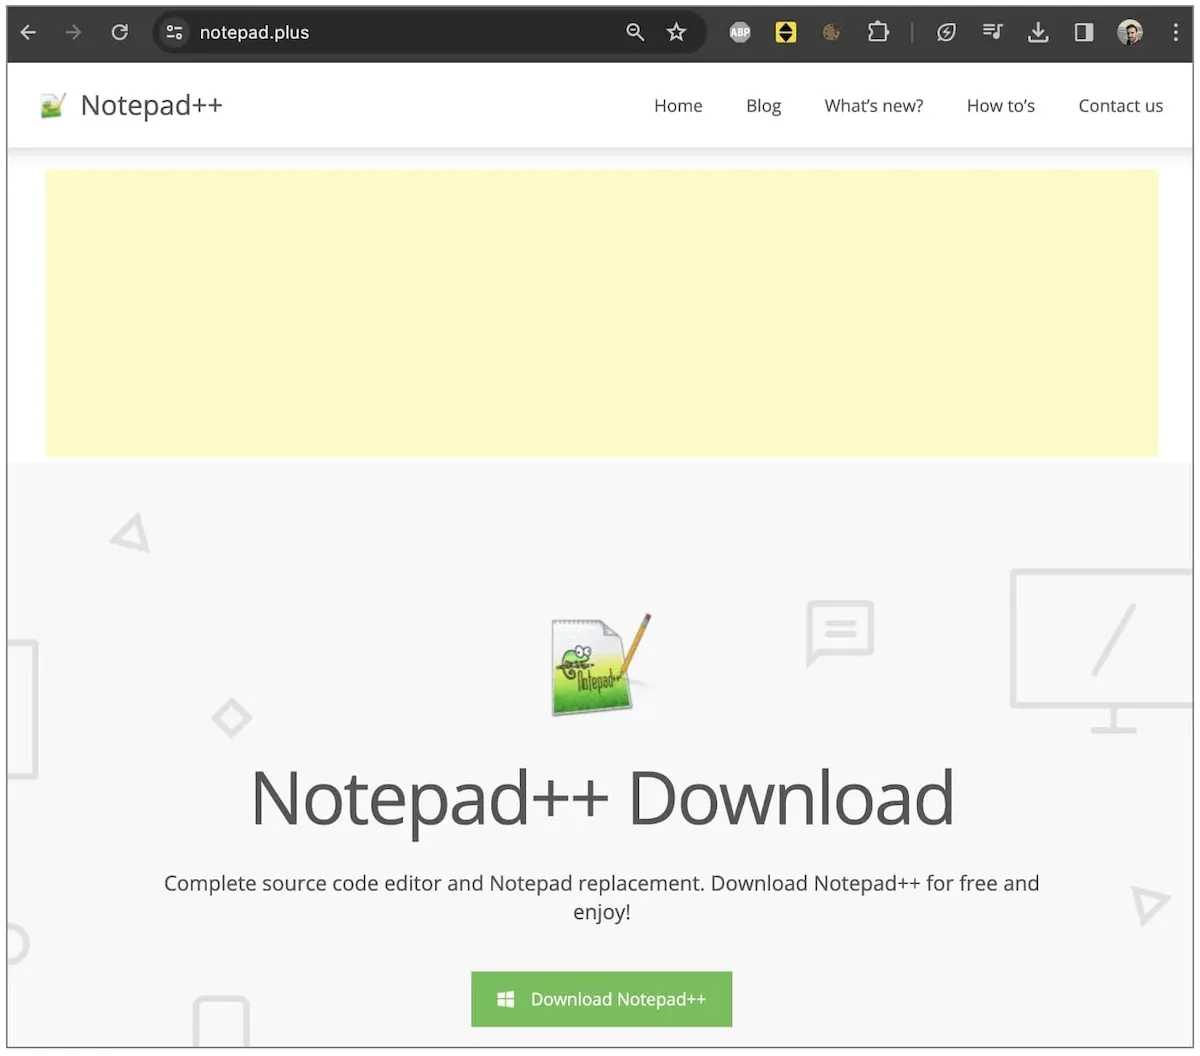 Notepad++ pediu ajuda para derrubar um site imitador